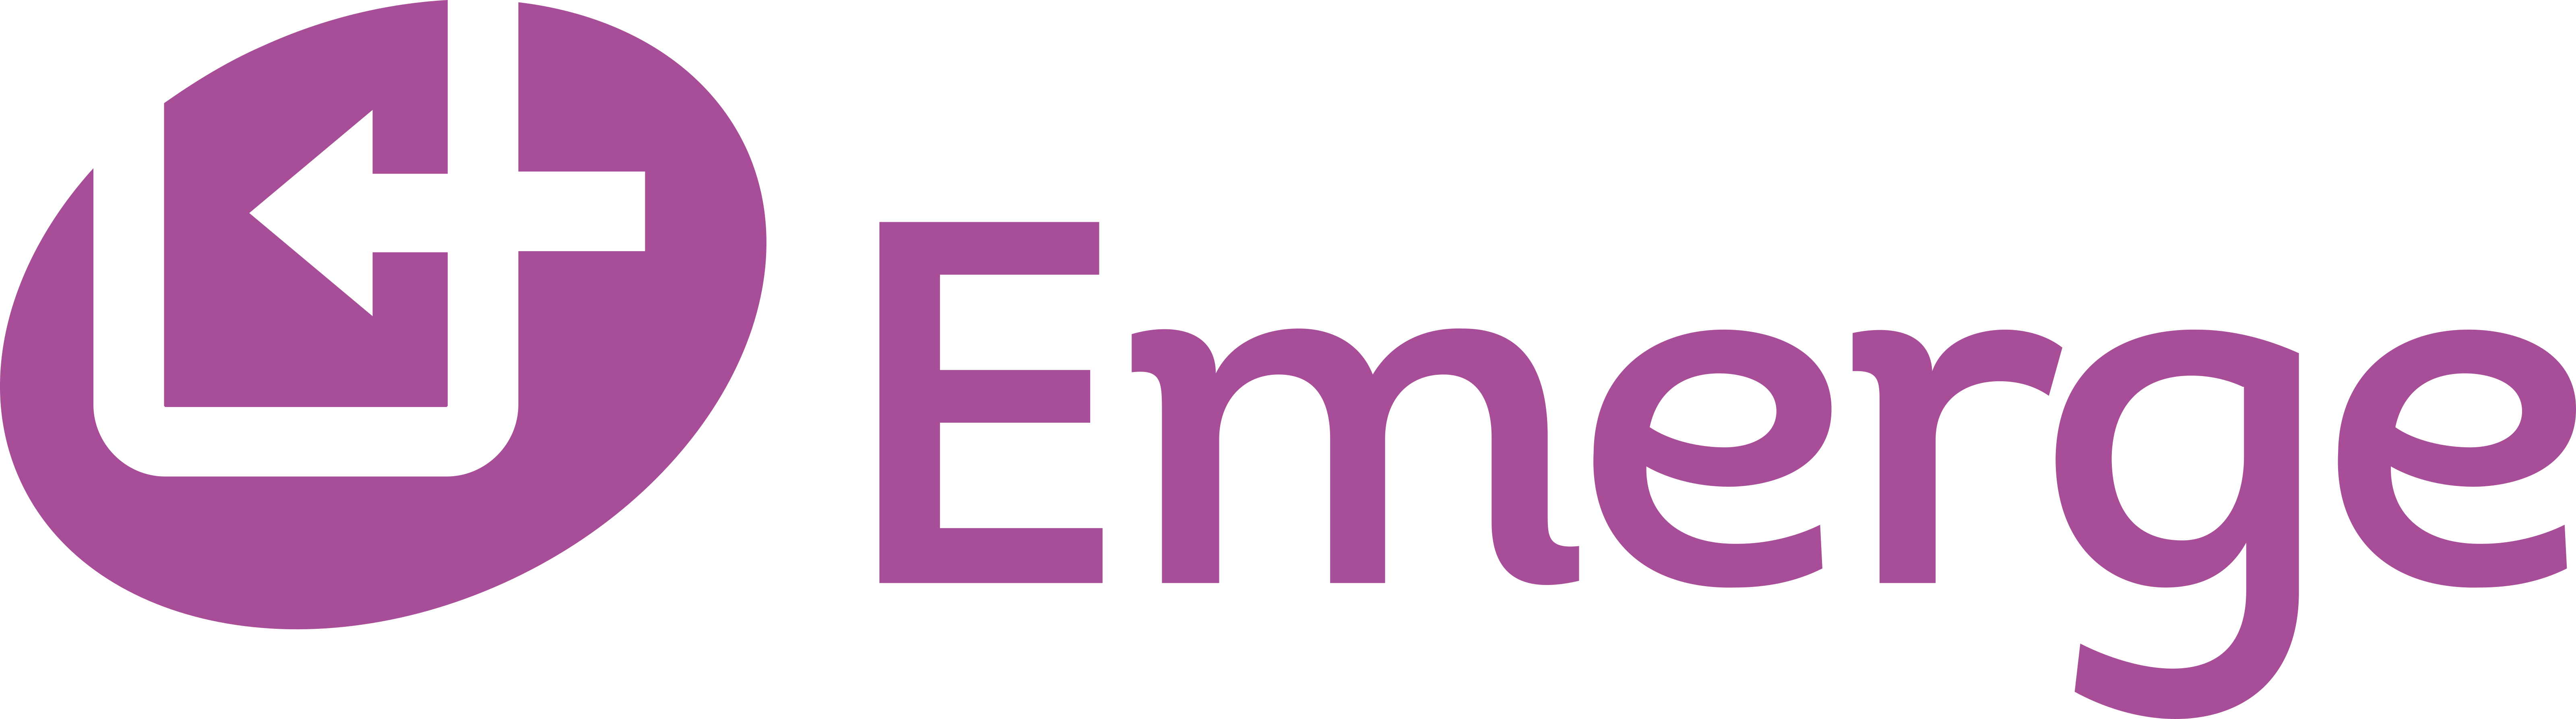 Groupcall Emerge for Web logo